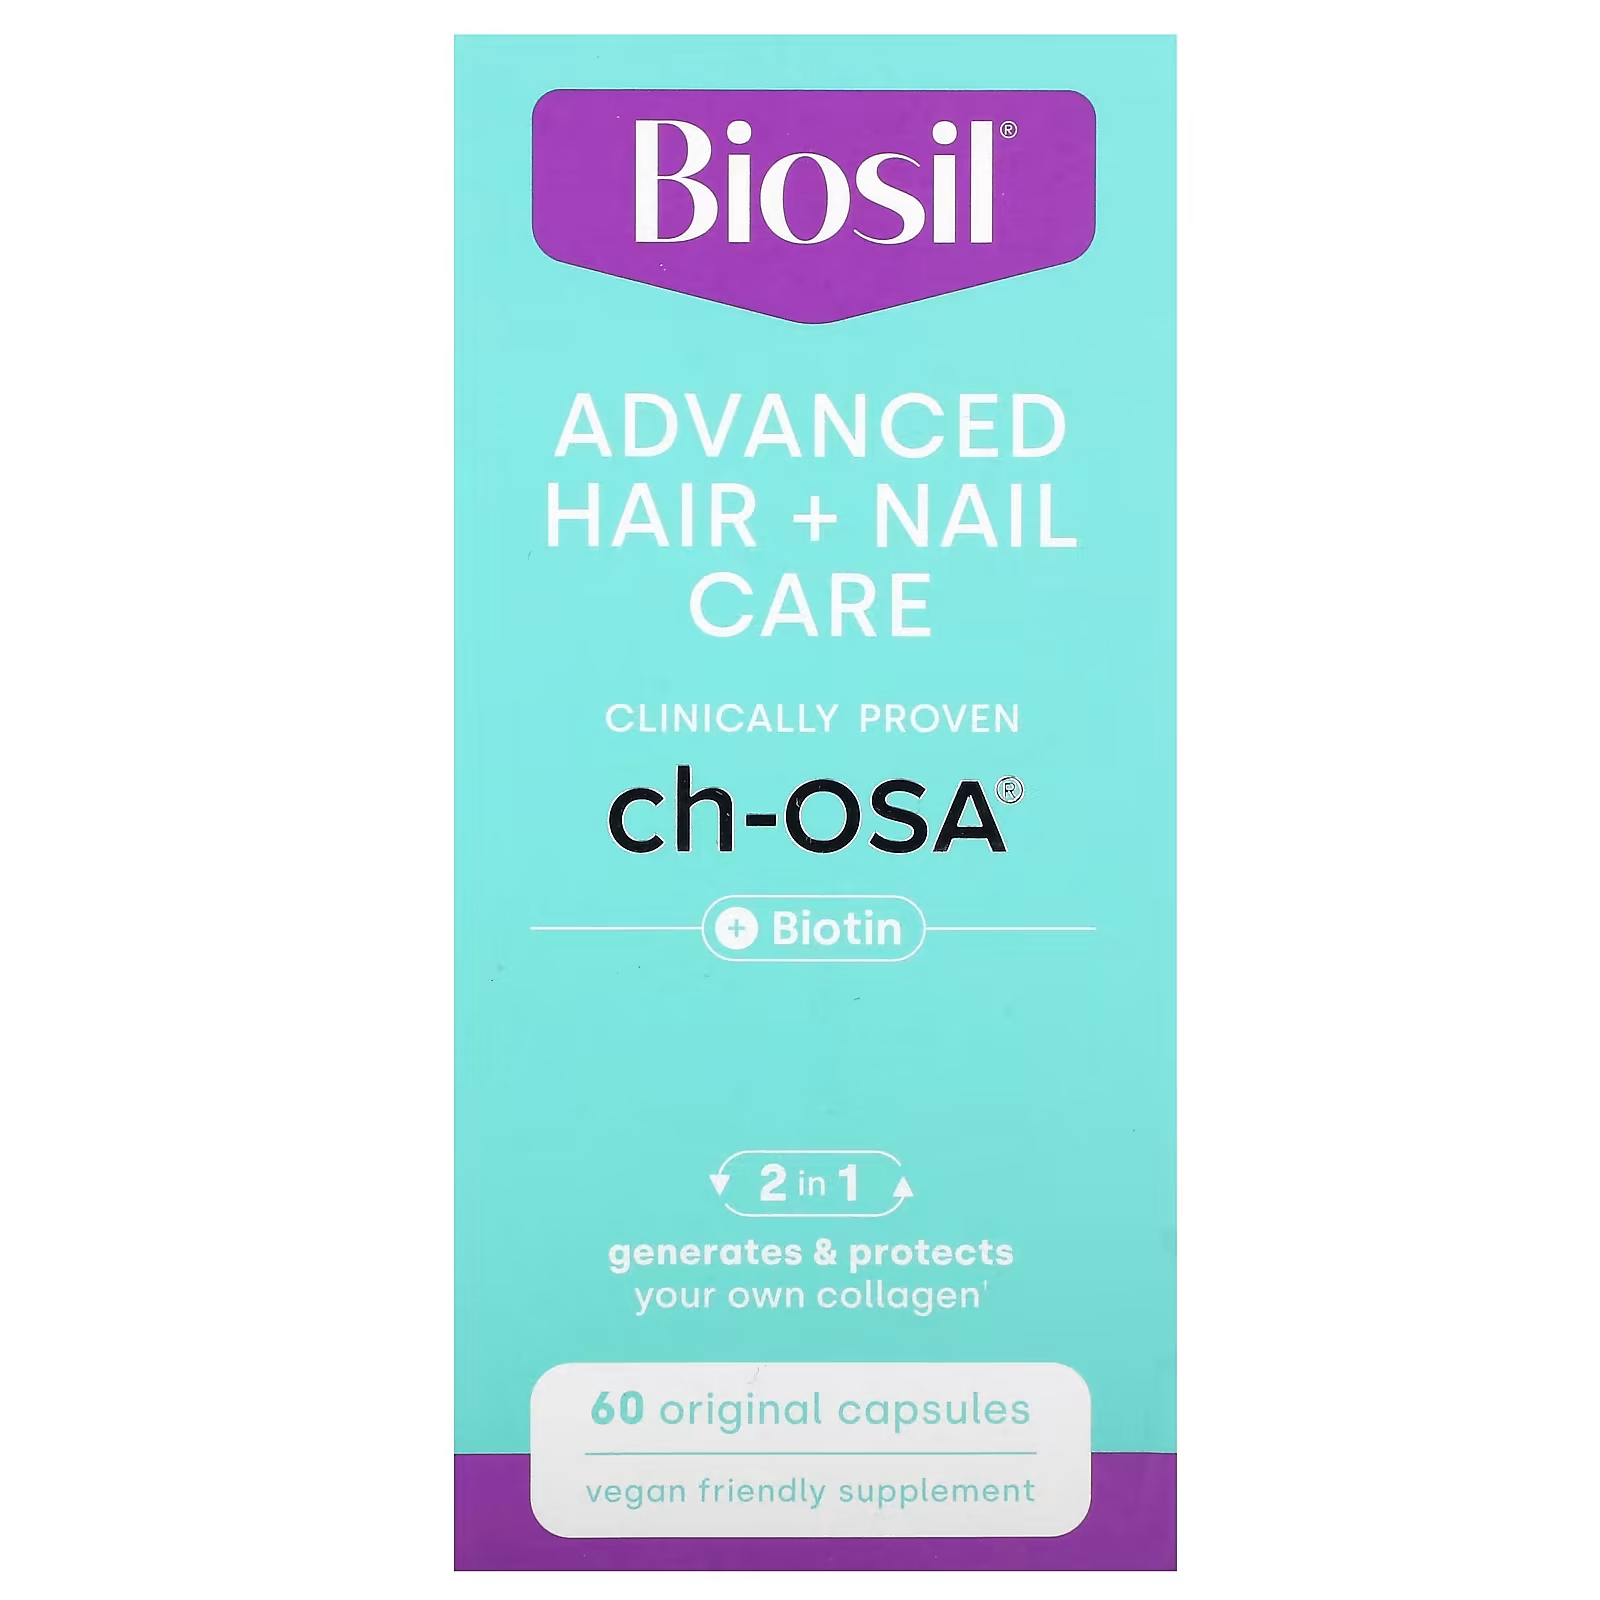 BioSil Advanced Hair + Nail Care 60 оригинальных капсул